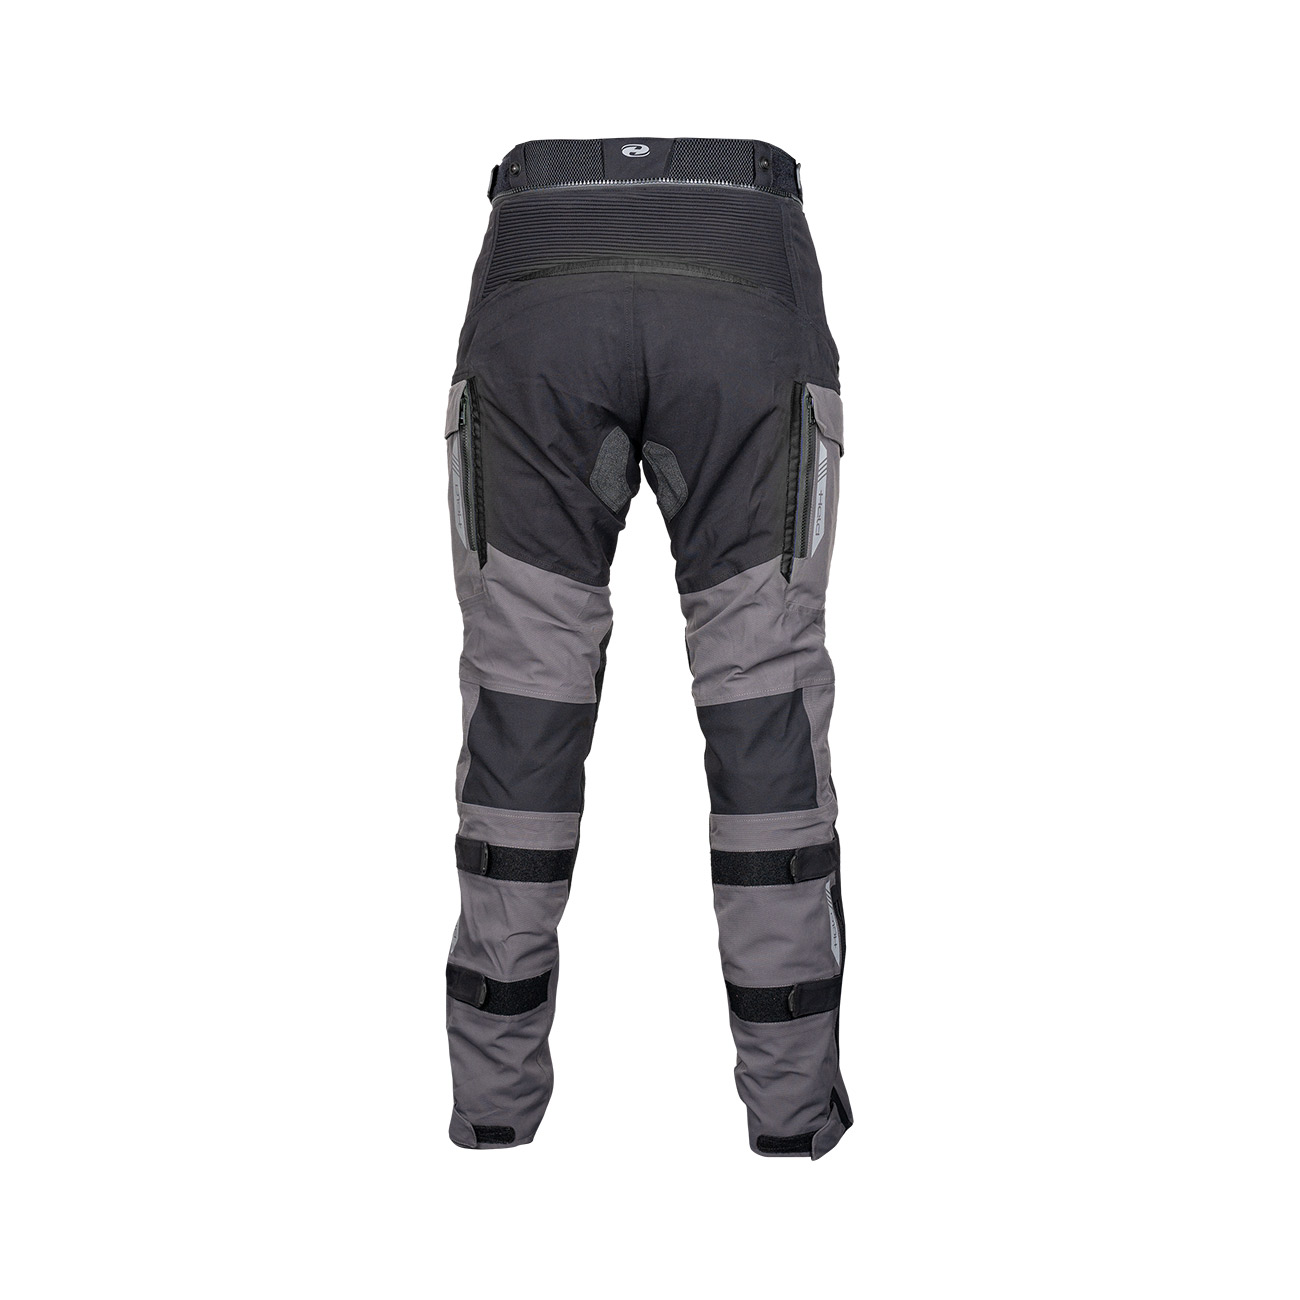 Lonborg Base Adventure trousers